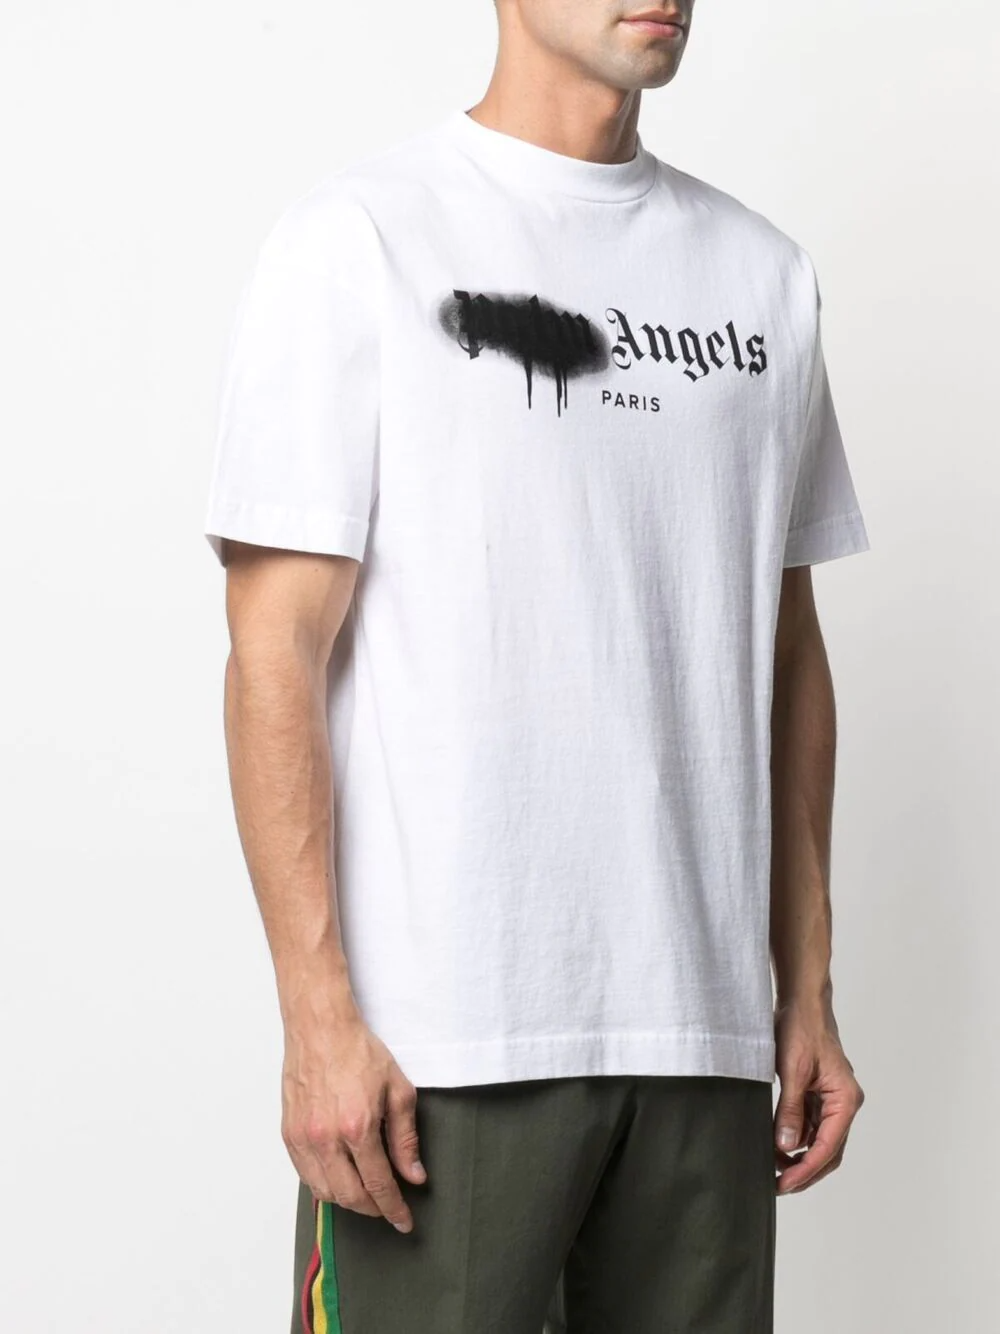 PALM ANGELS SPARY LOGO T-SHIRT 'PARIS'